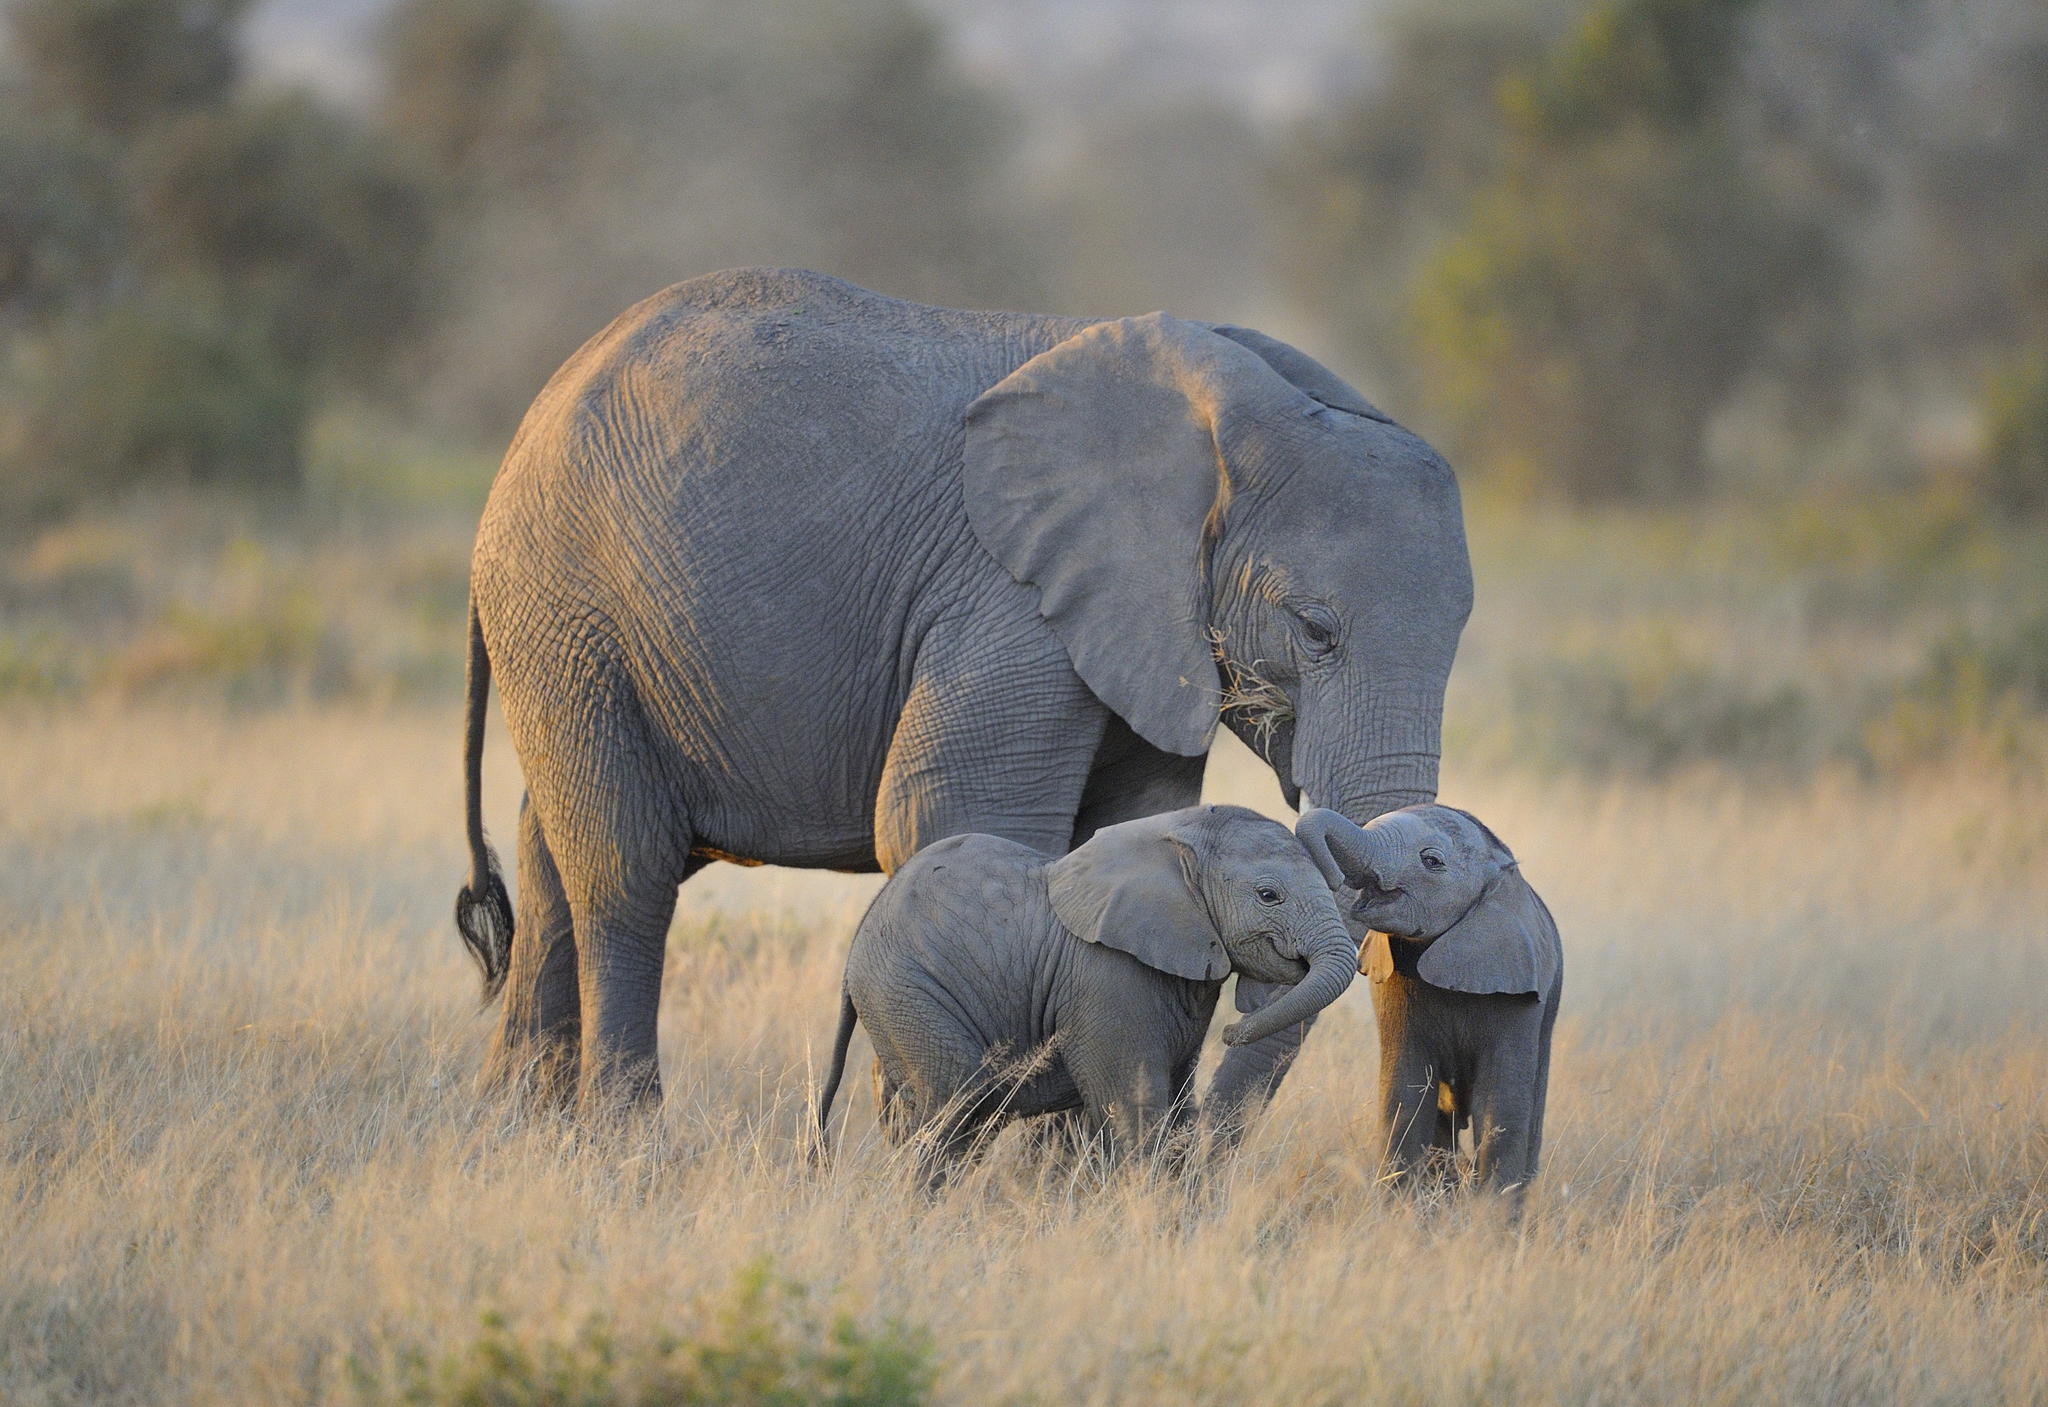  these elephants adorable baby 